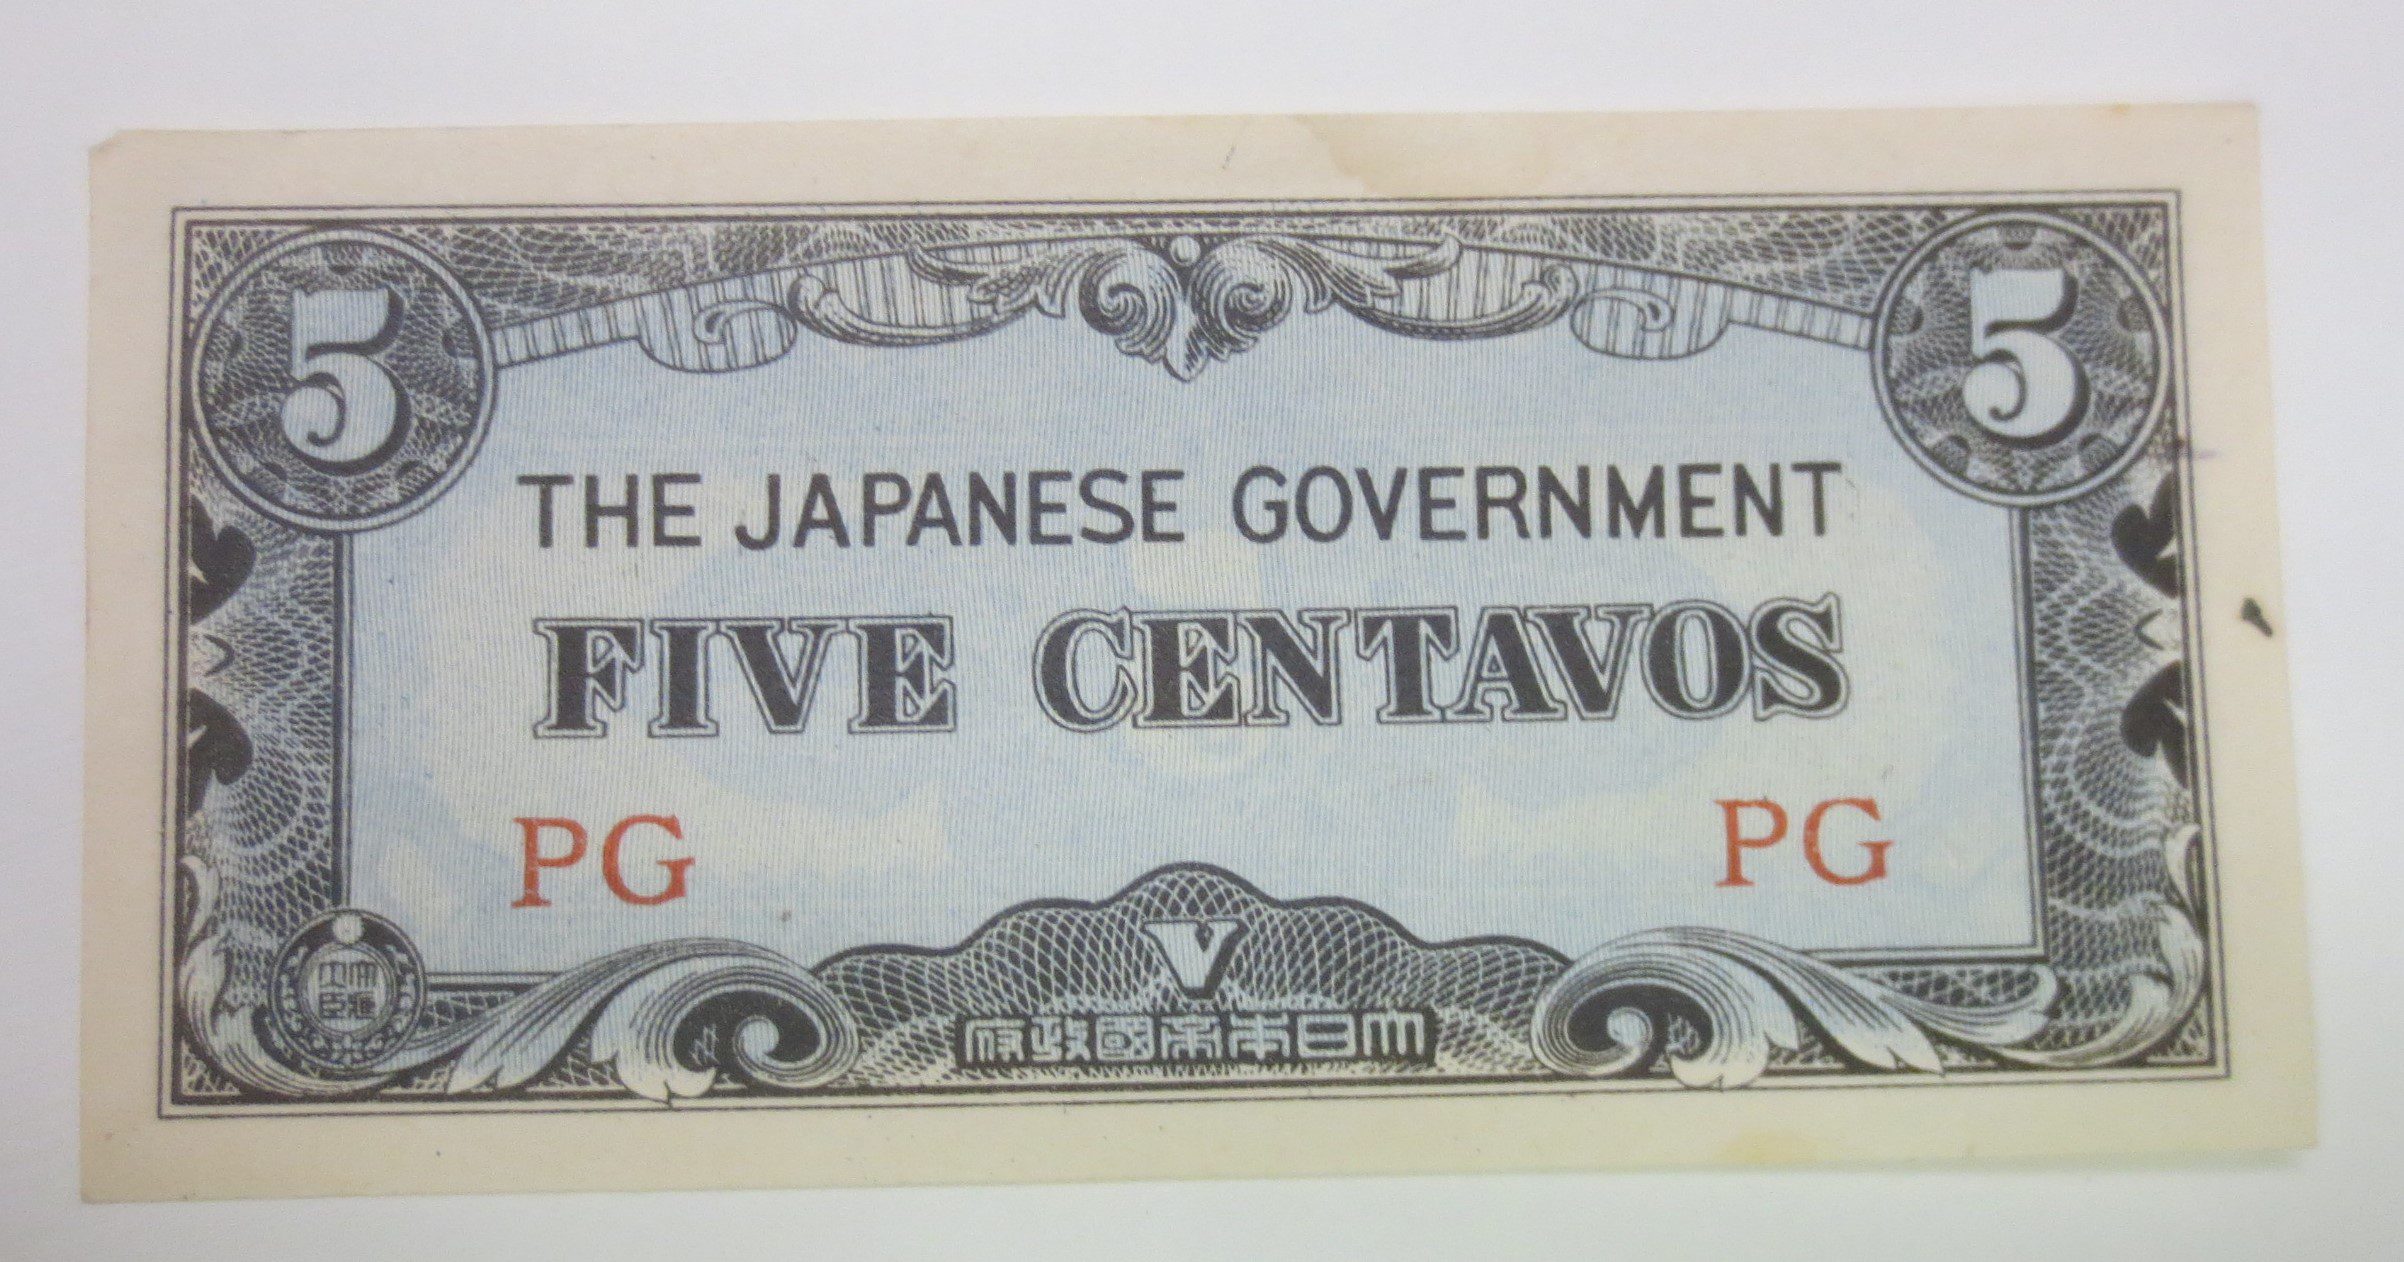 Japanese five centavos note